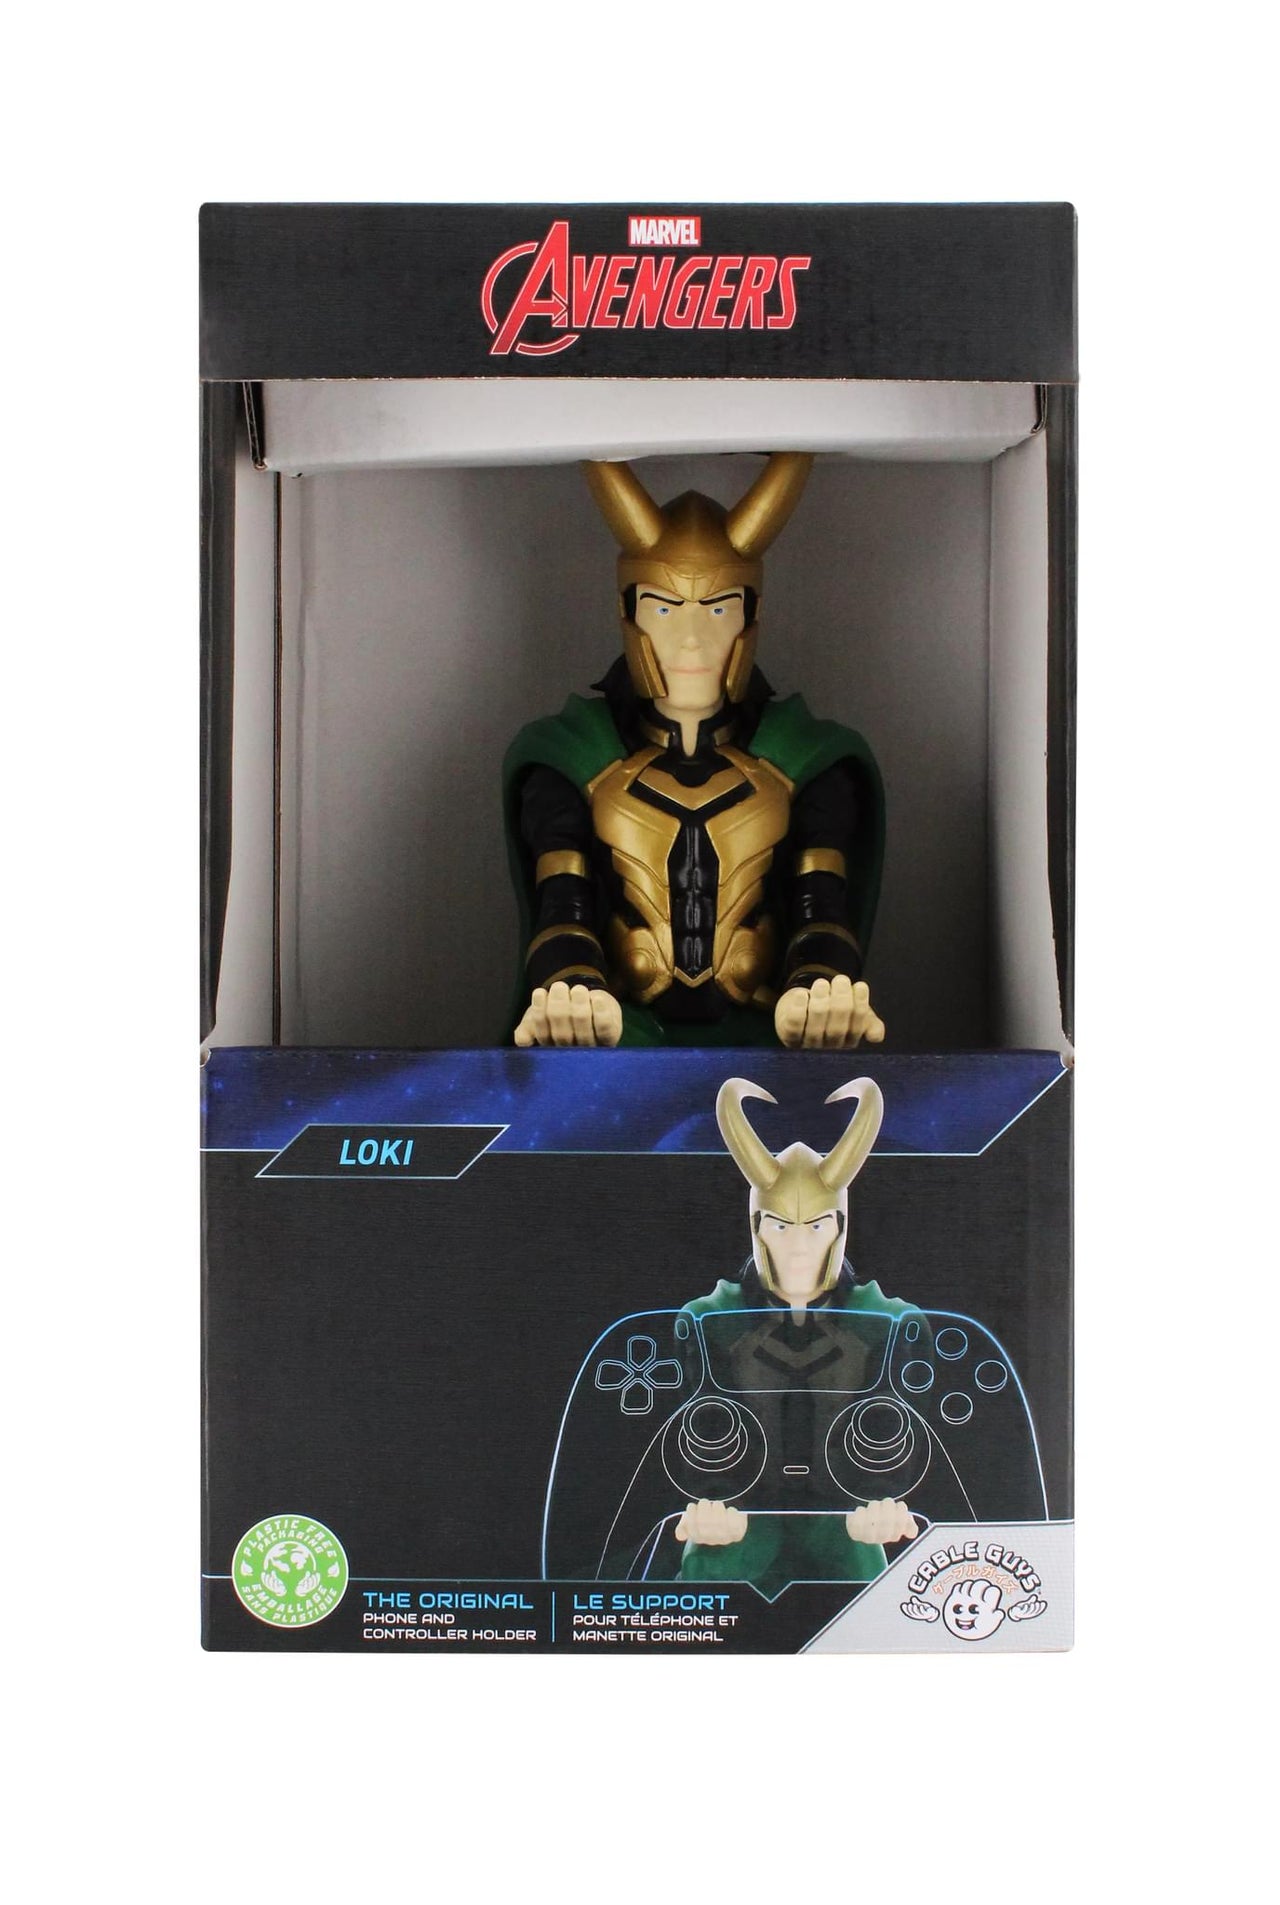 Loki Cable Guy in Packaging